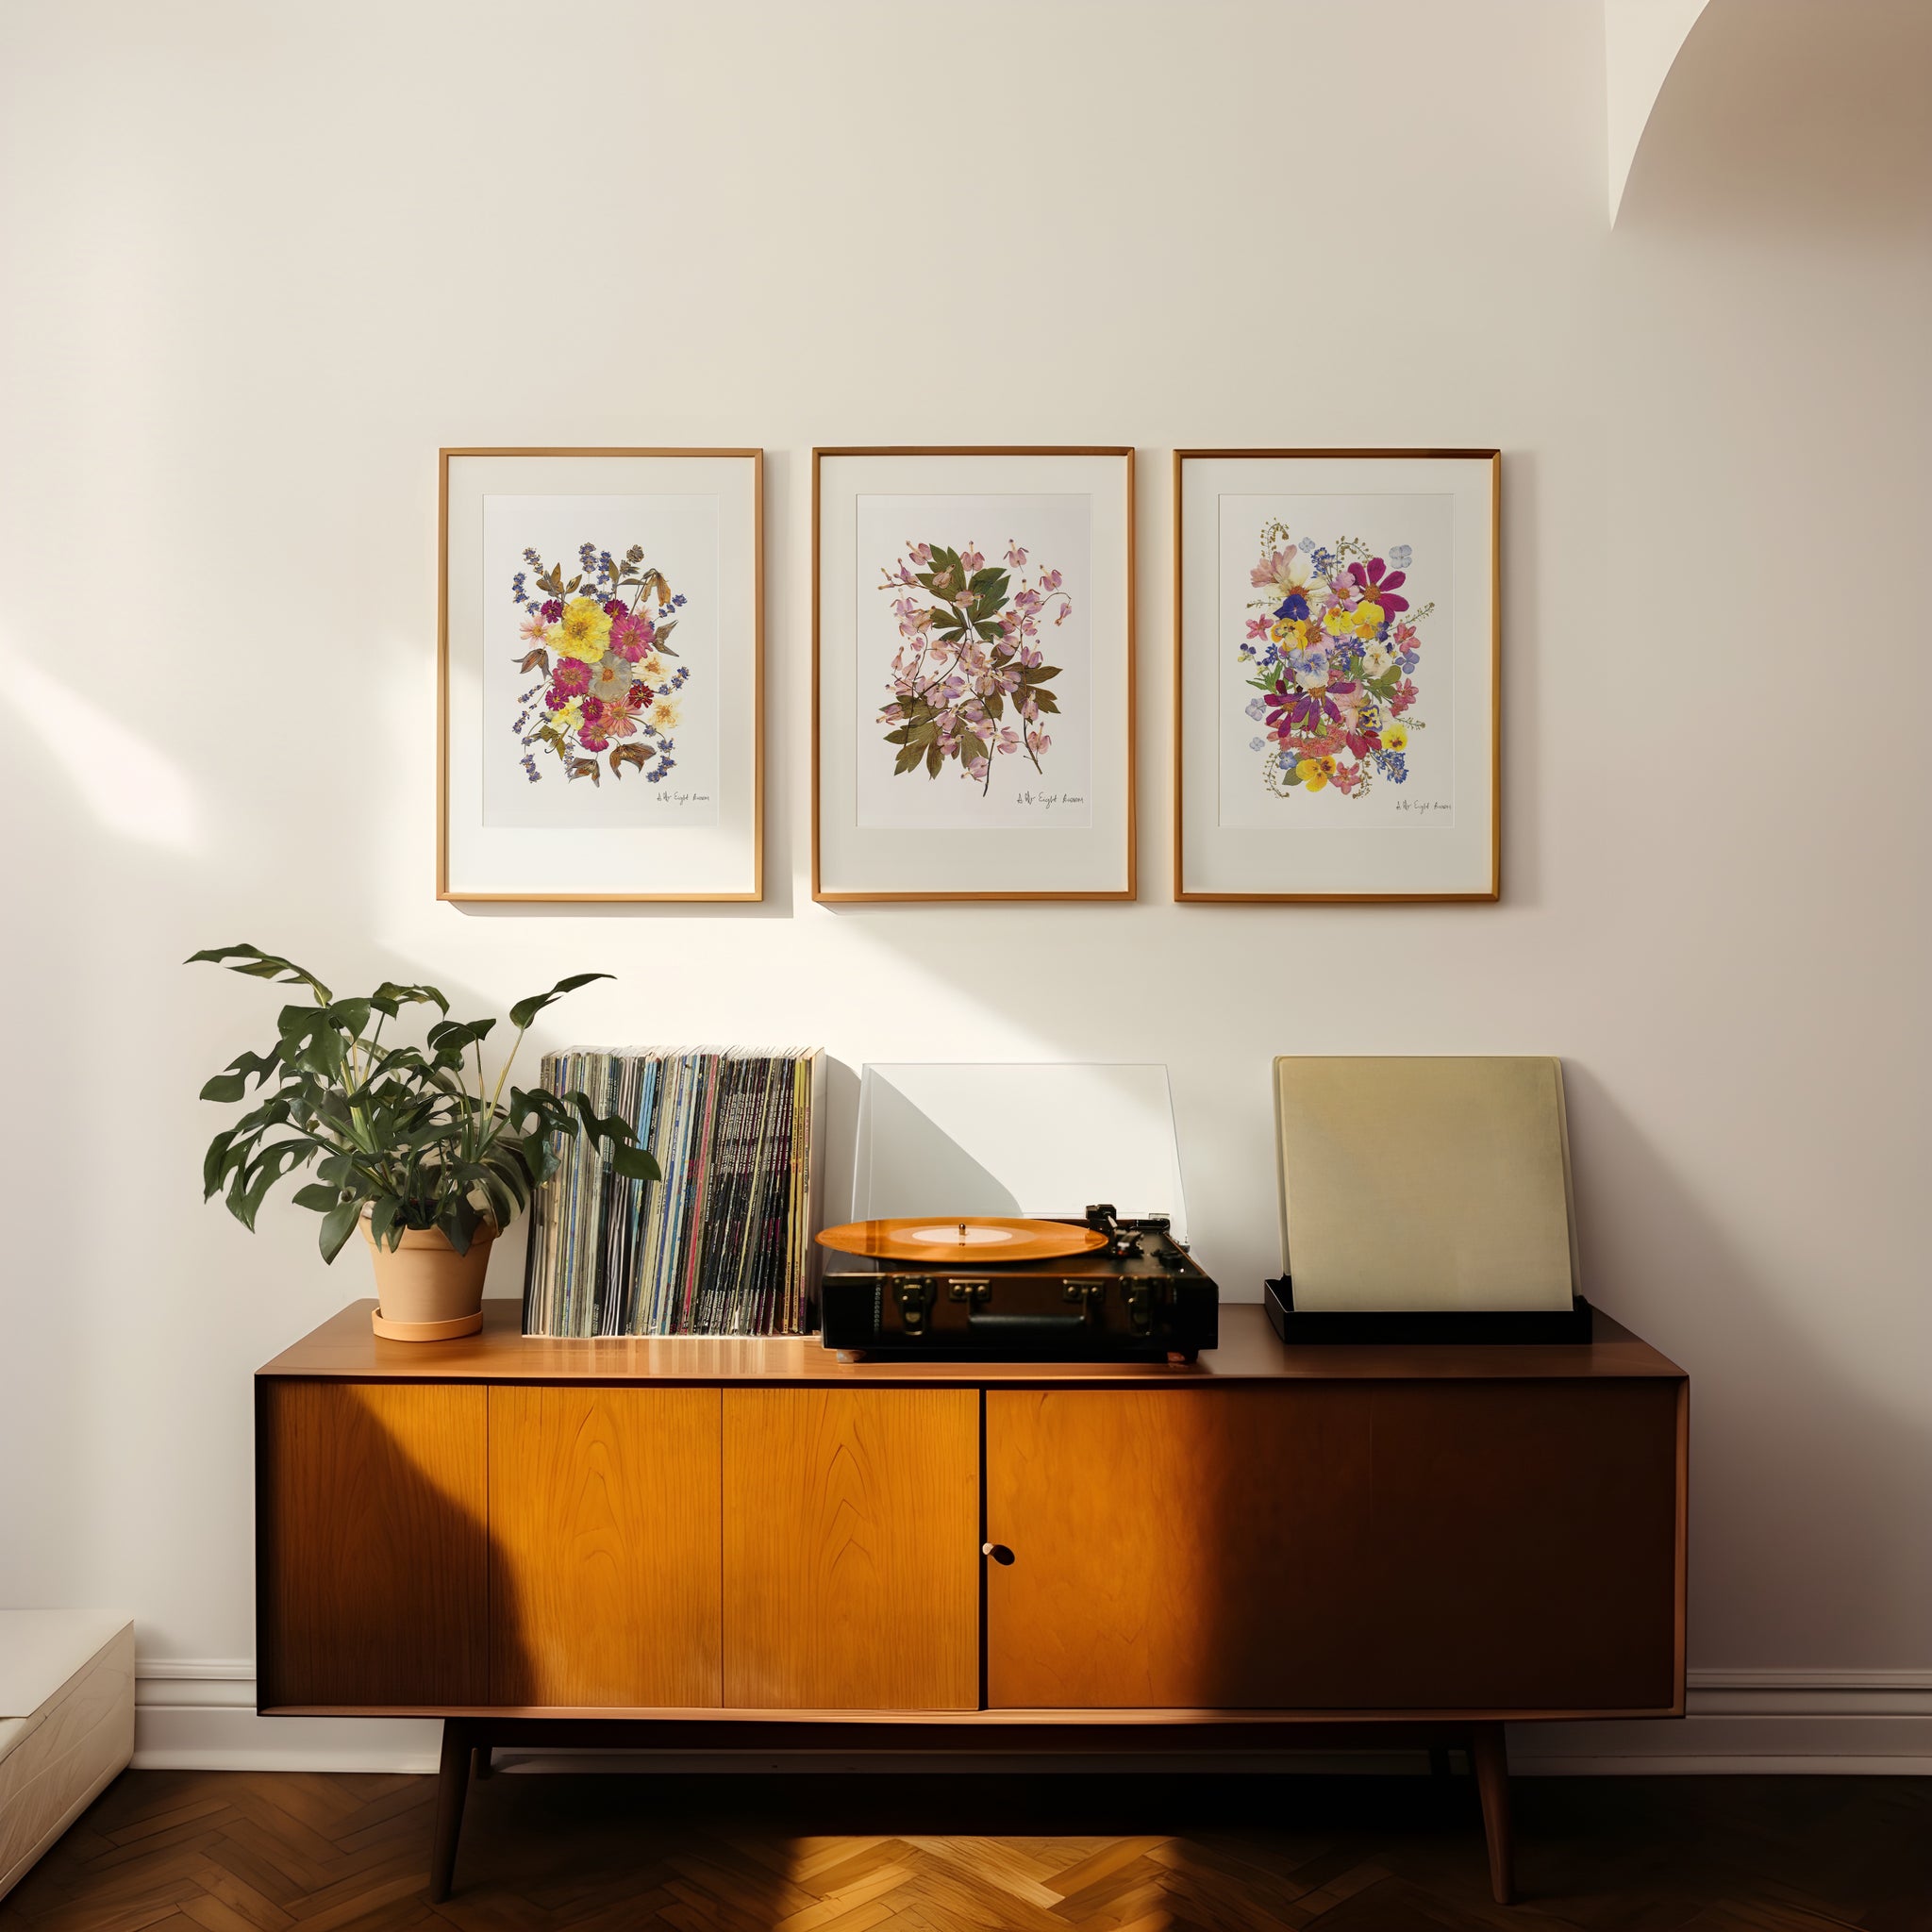 Pressed flower art, Botanical print, herbarium specimen dried flower a –  Eight Acorns Floral Preservation